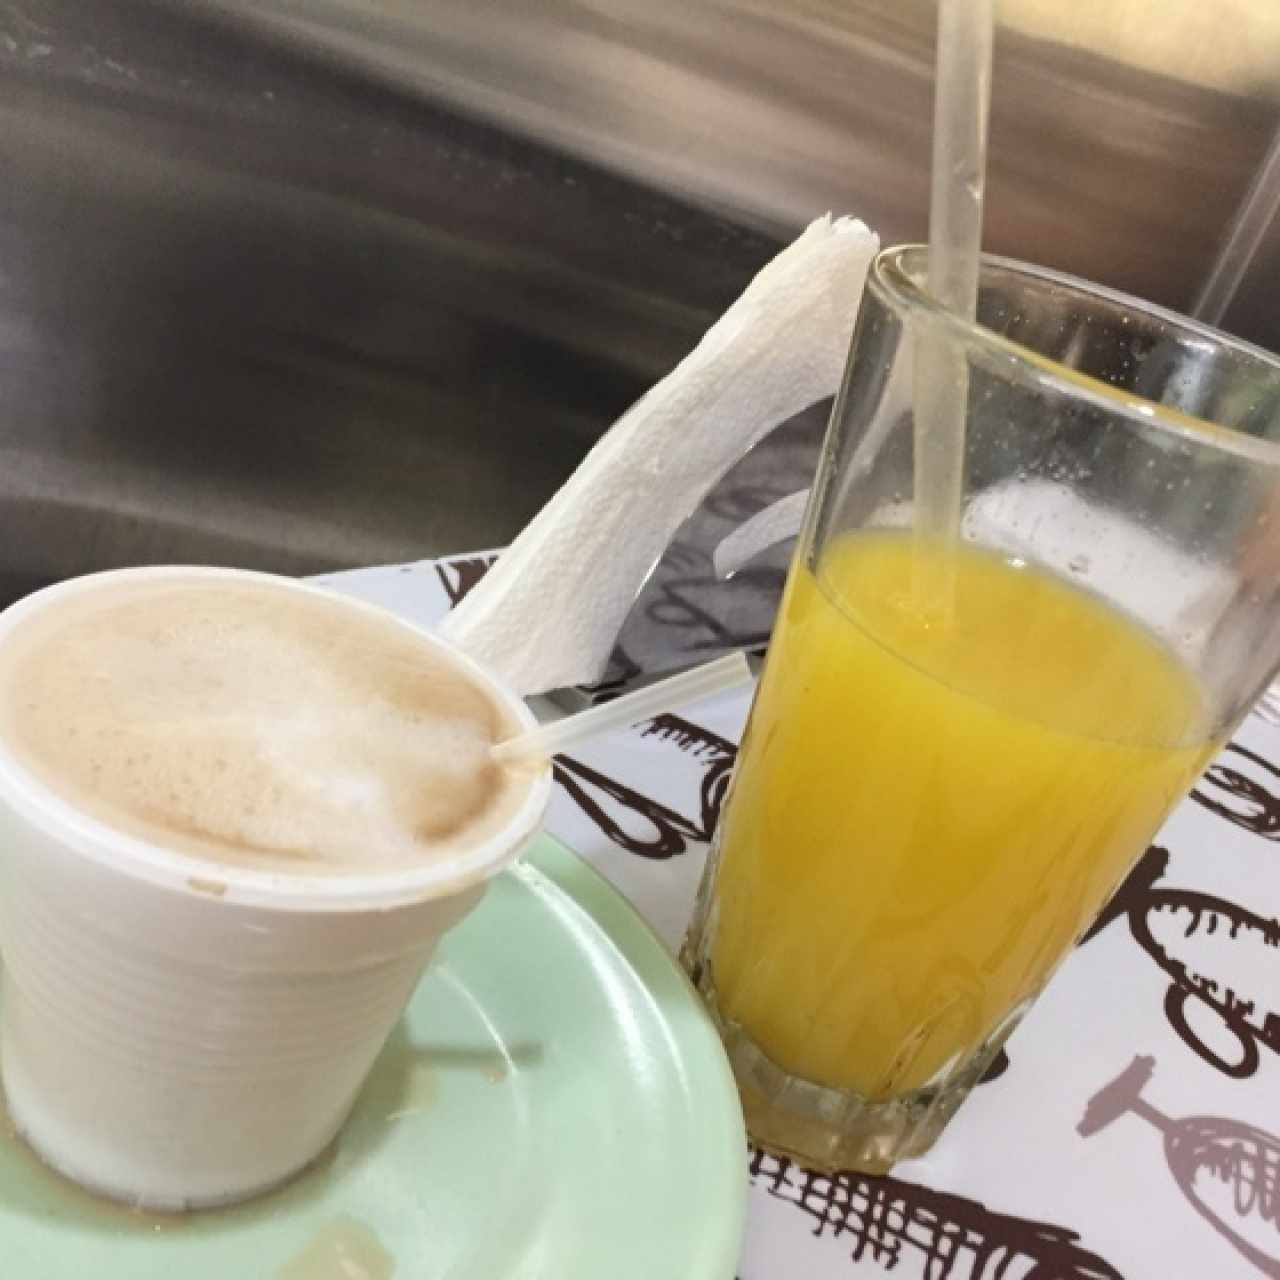 Excelente Café y Jugo de Naranja..!